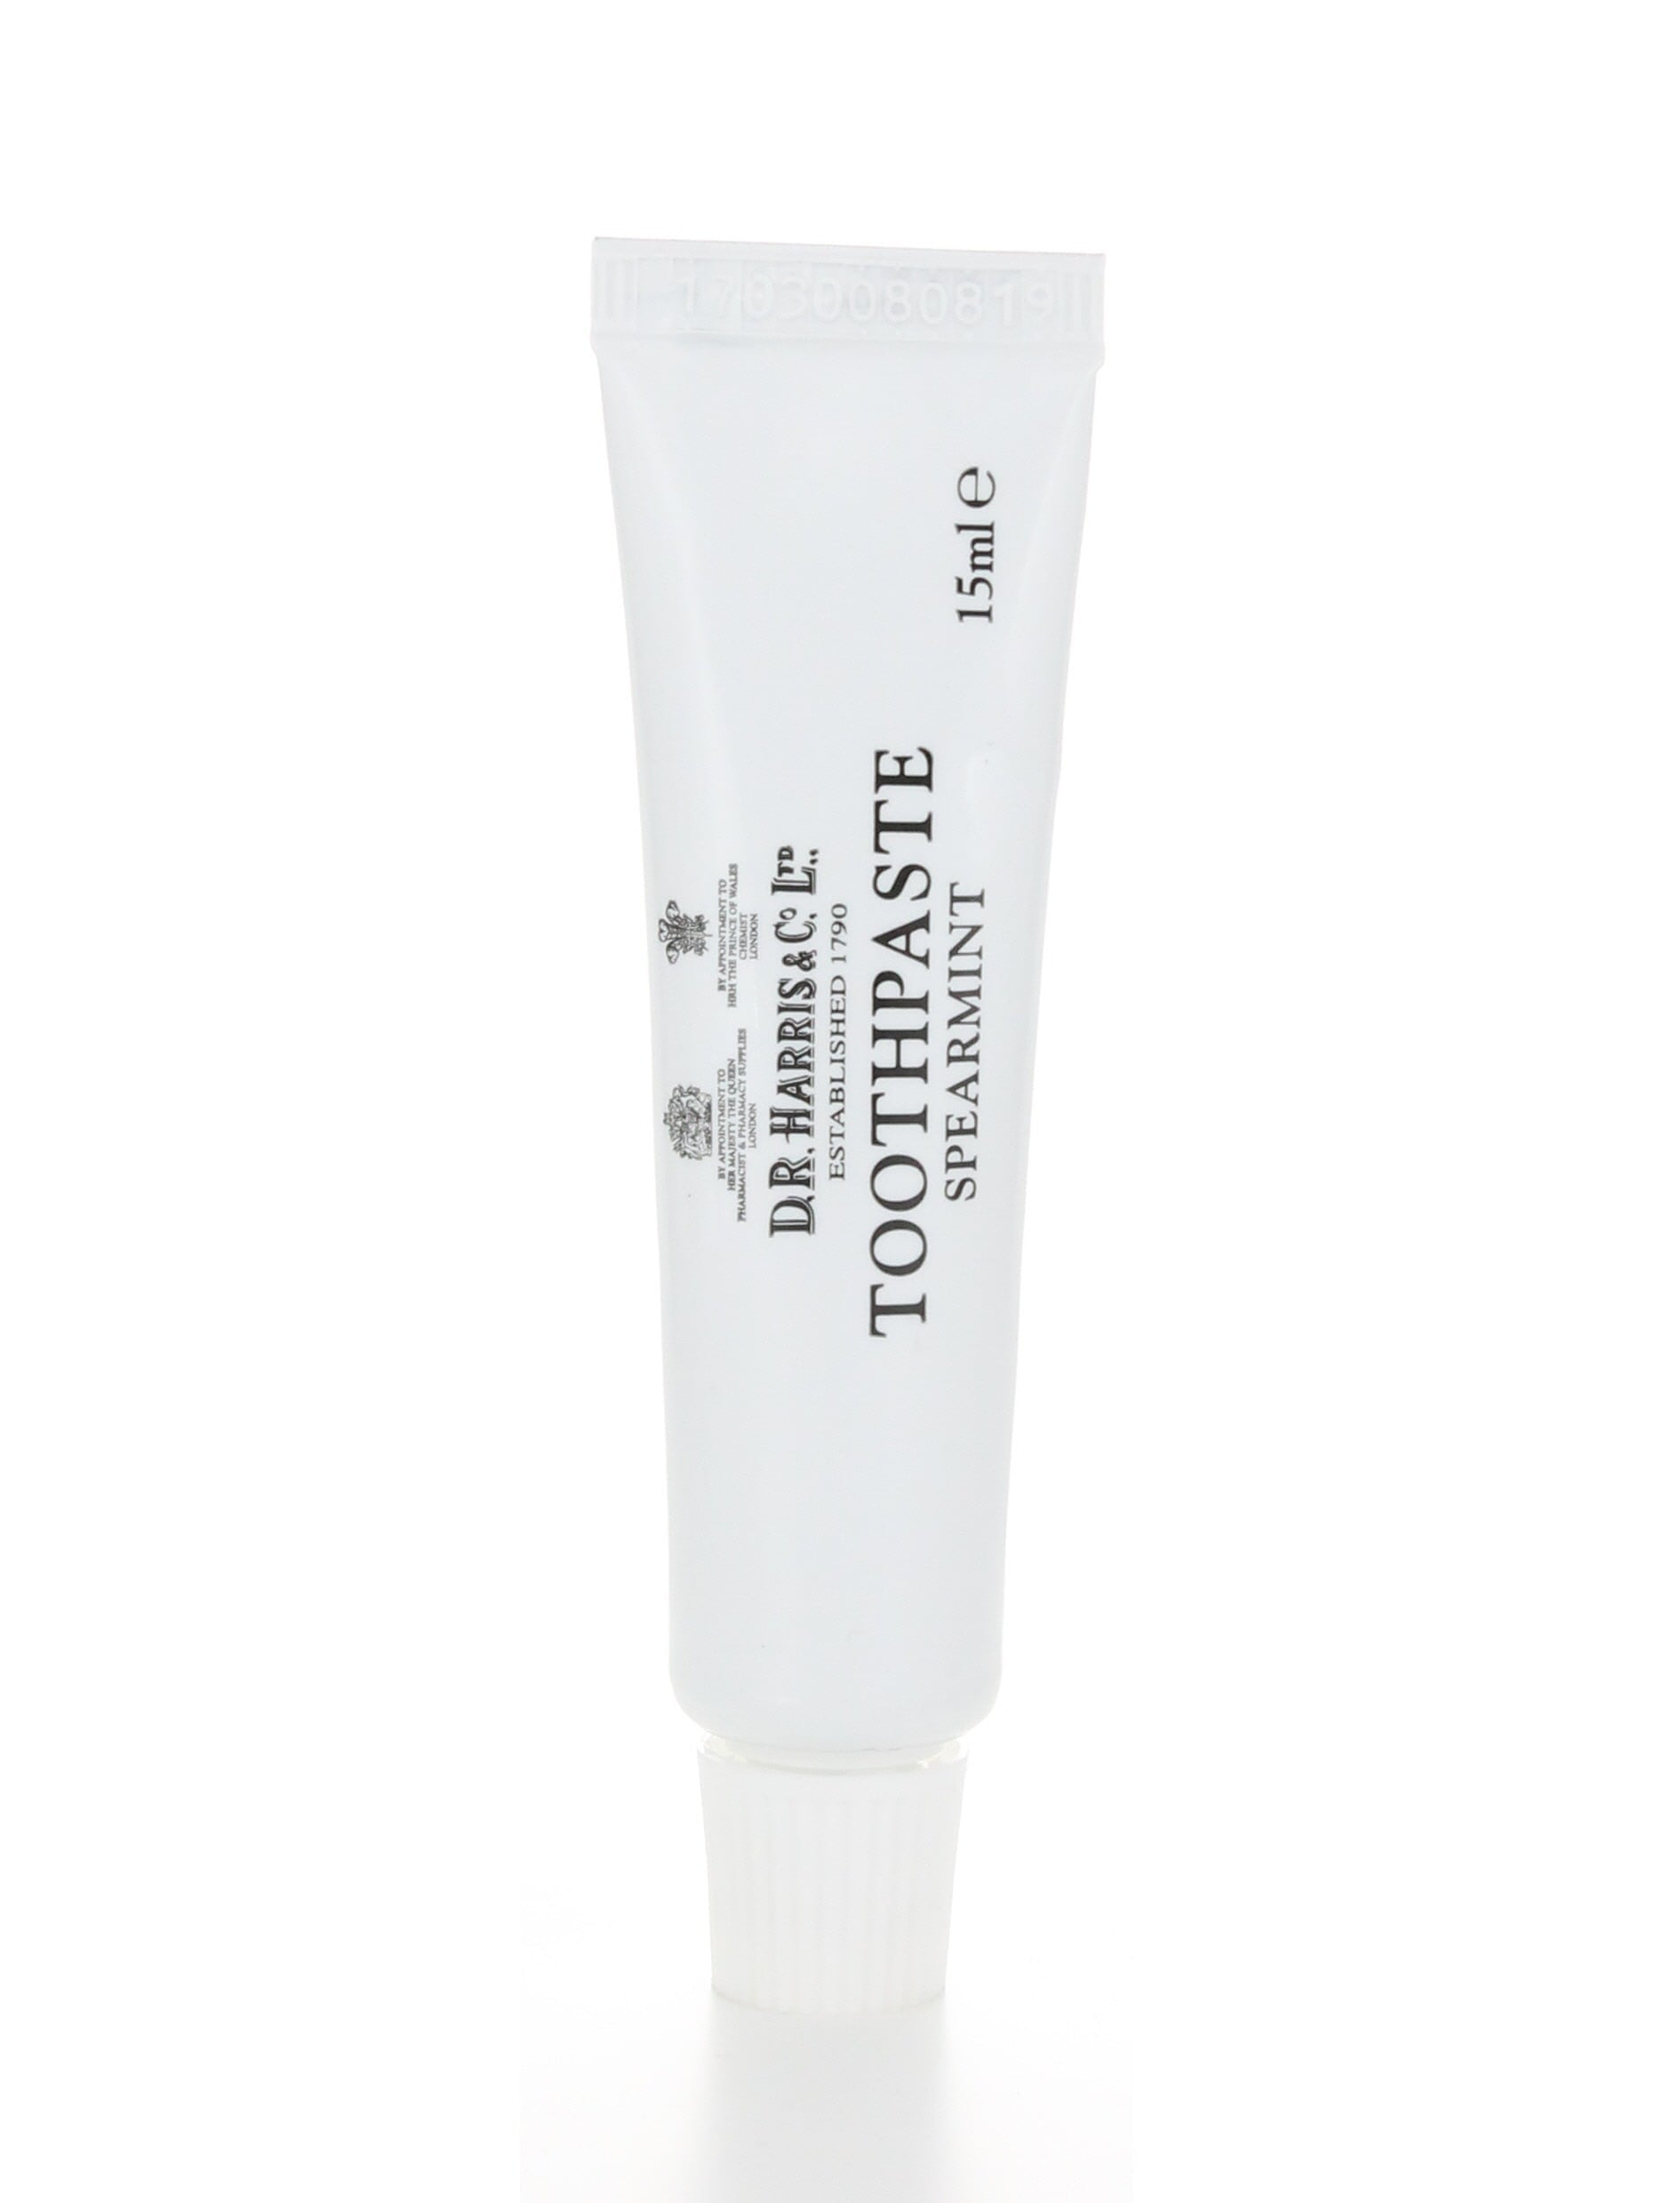 D.R. Harris Spearmint Toothpaste 15ml Travel Size